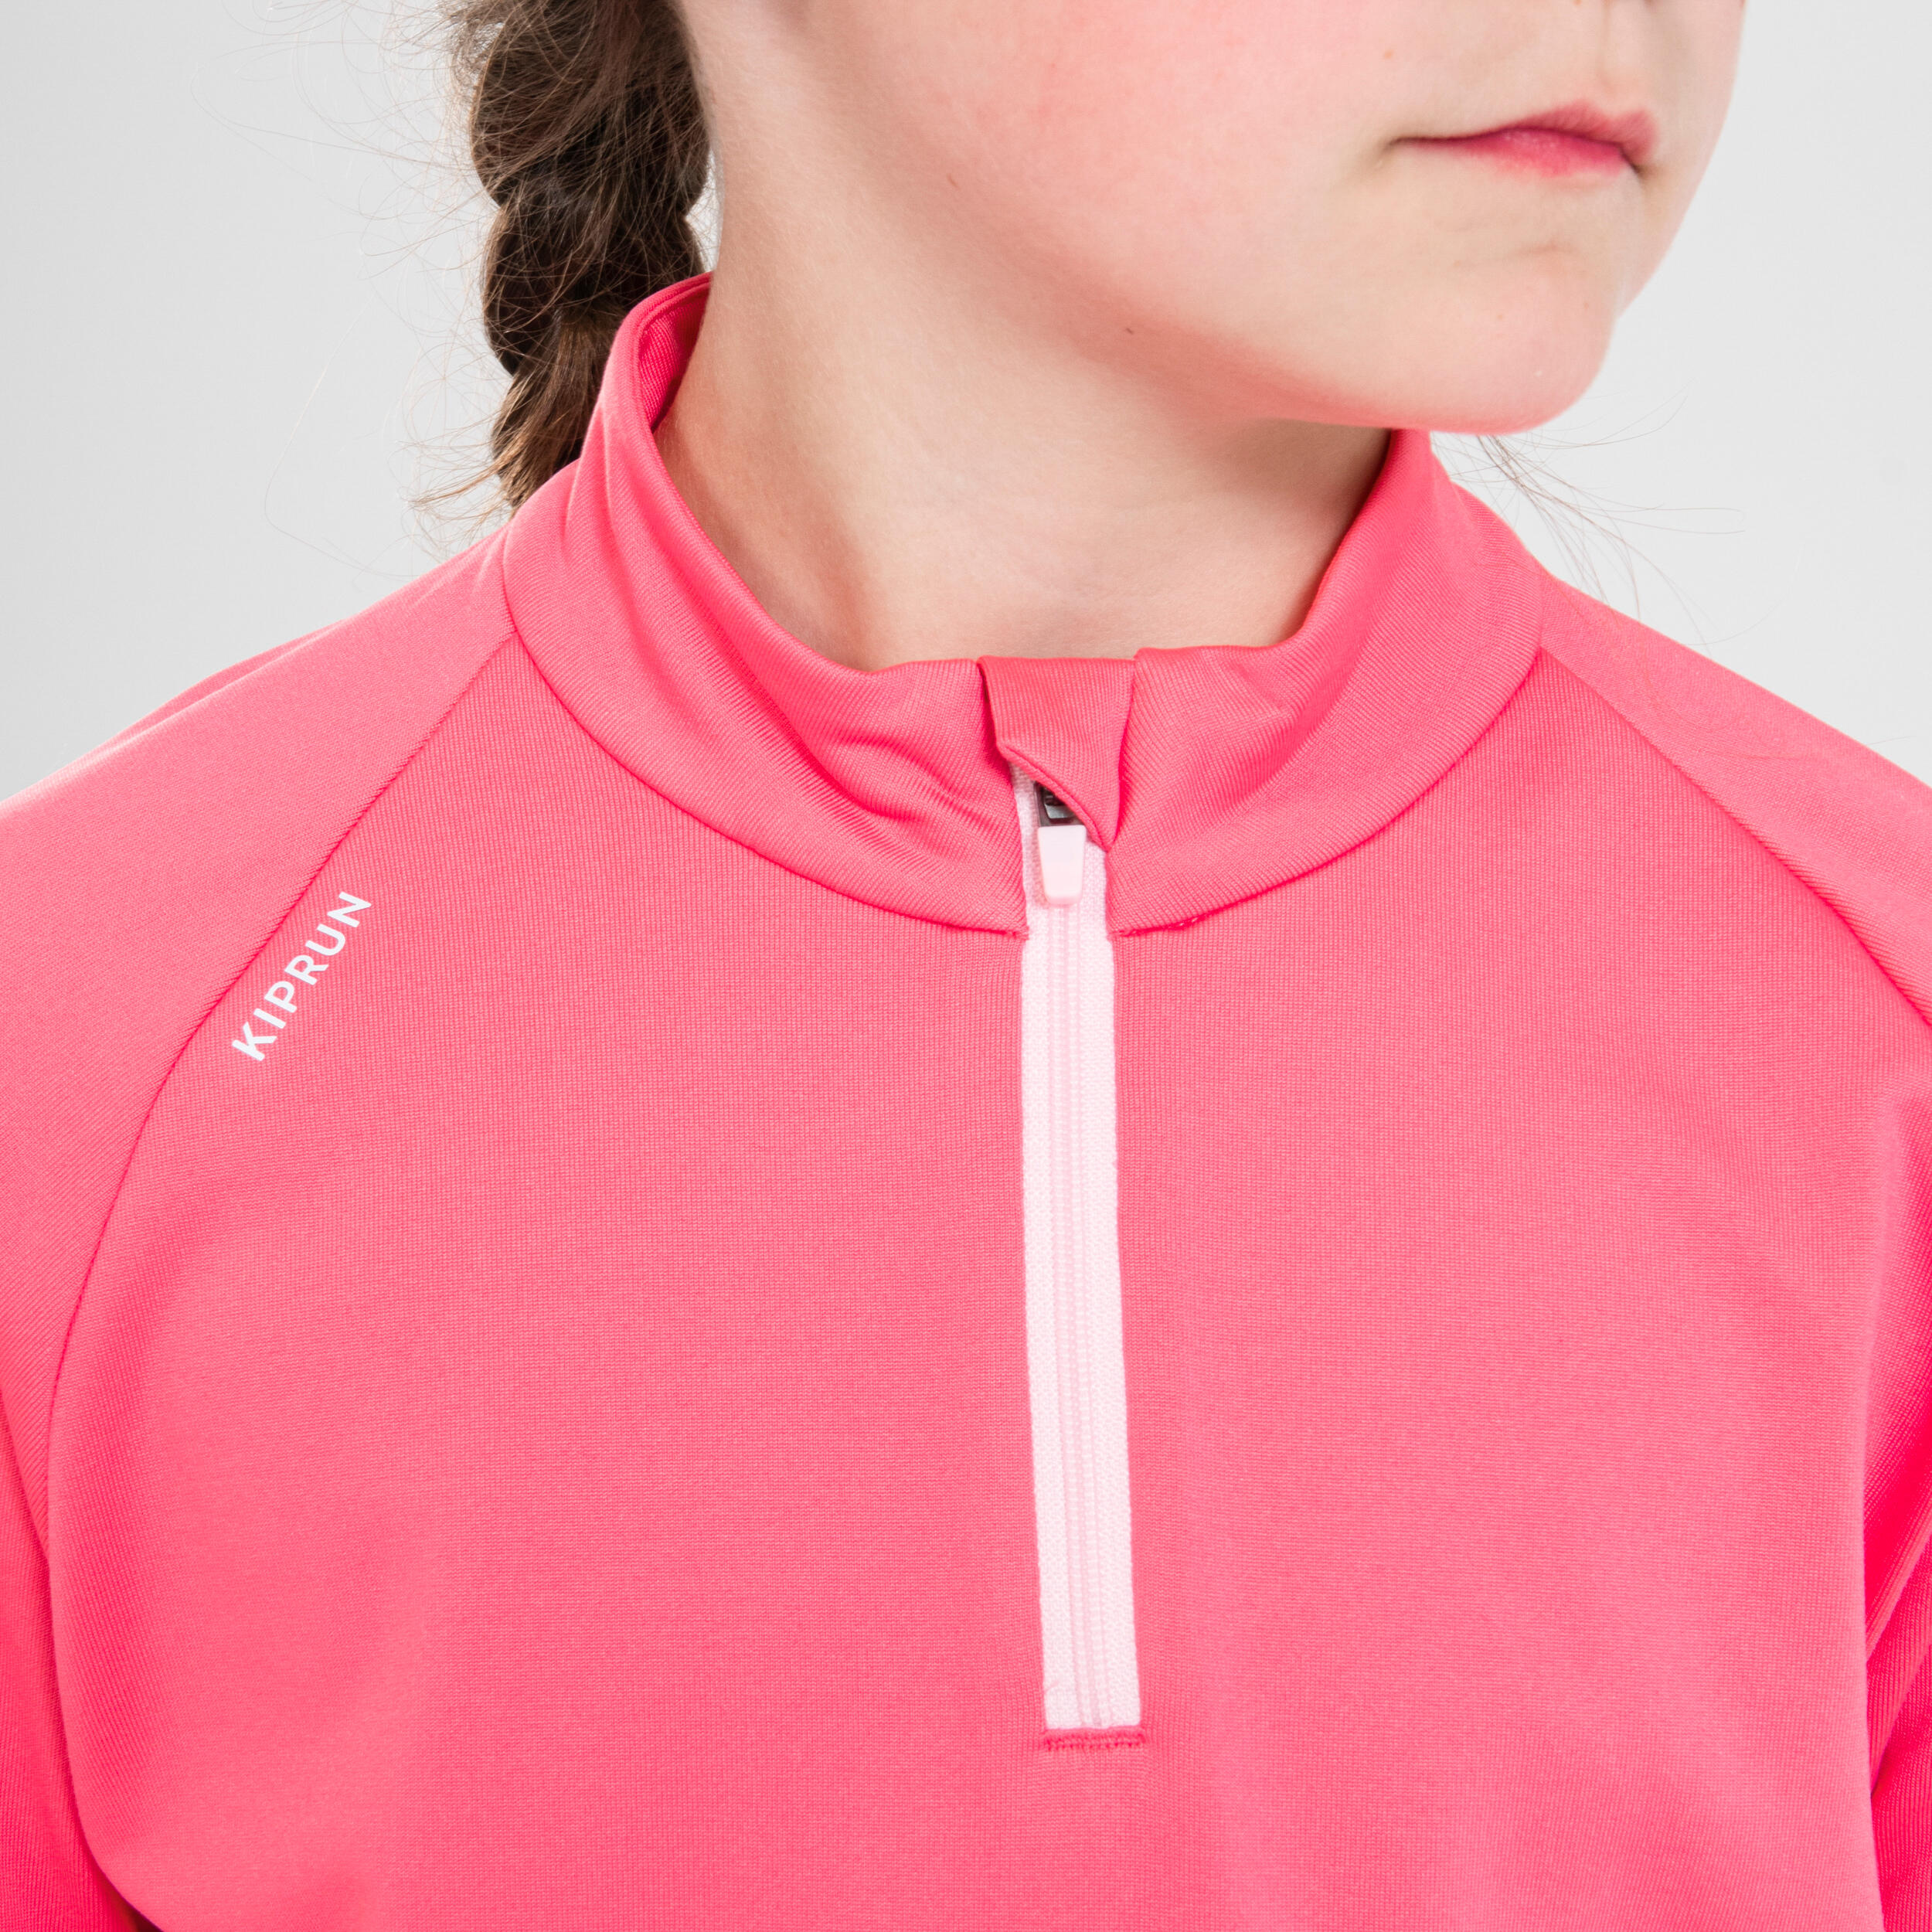 Kids' KIPRUN WARM Warm+ 1/2 zip long-sleeved jersey - Pink 4/10